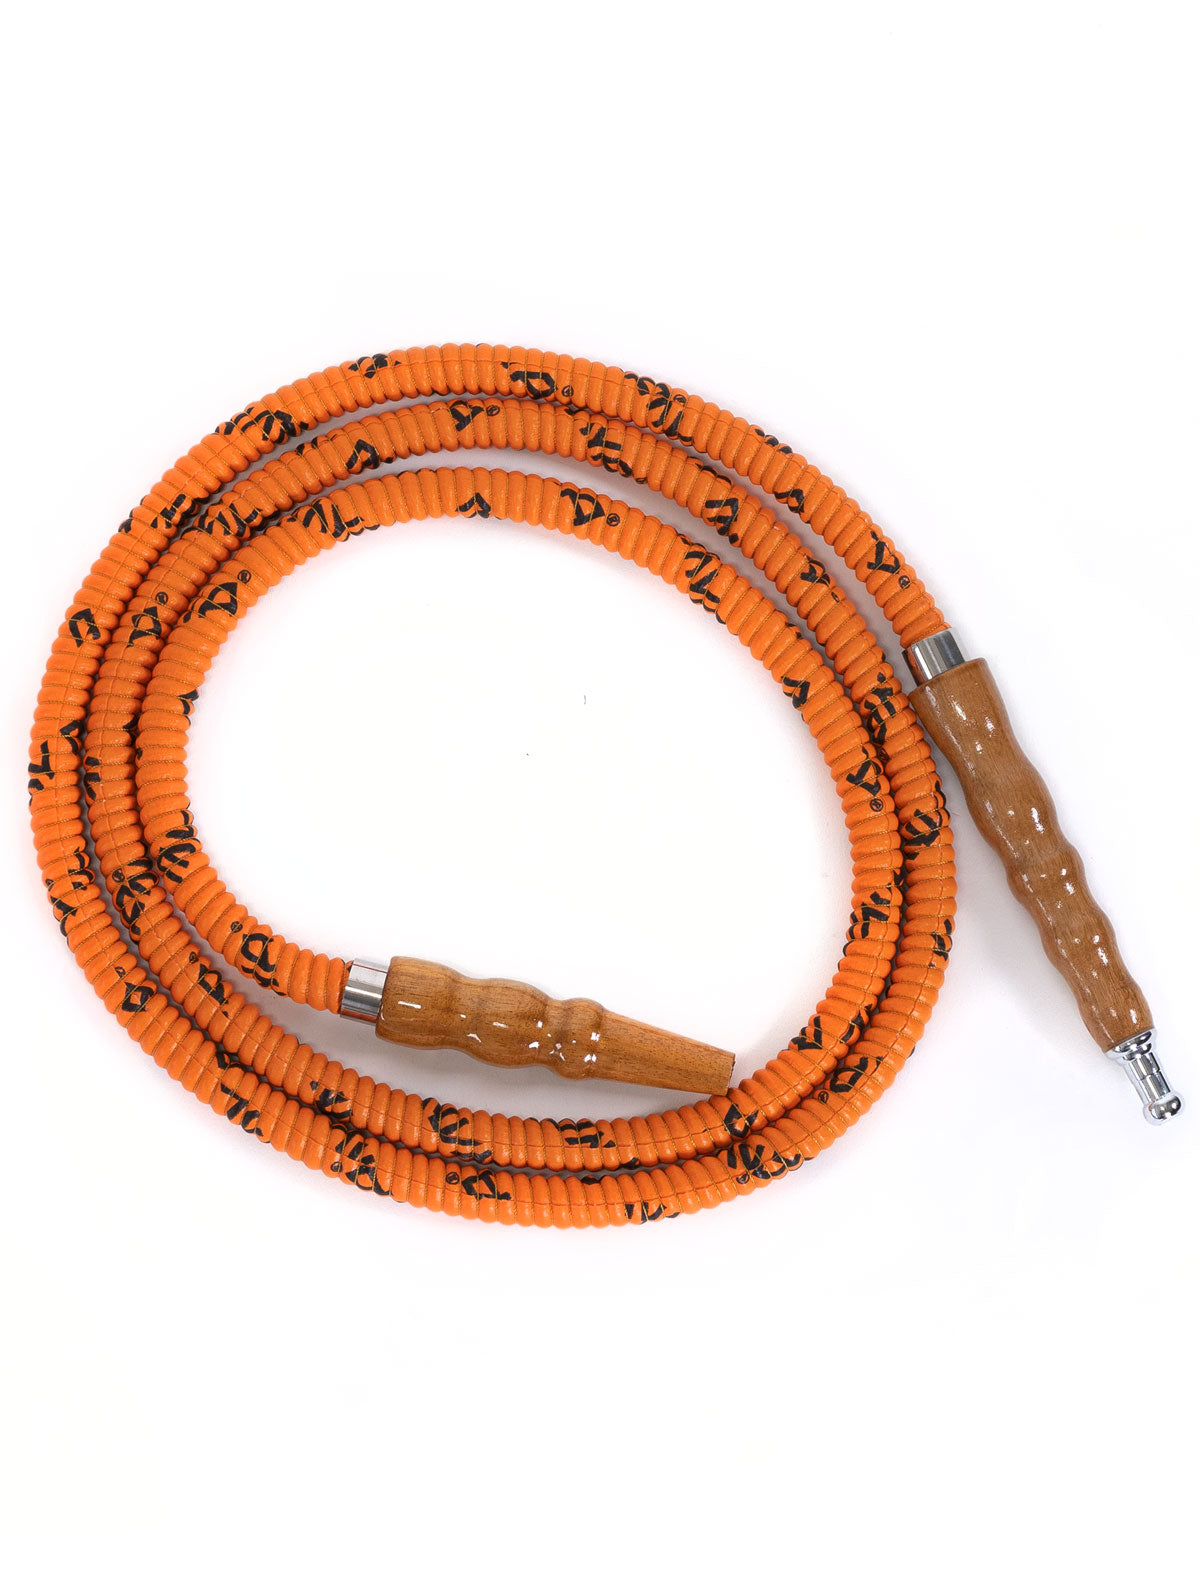 Mya Orange Replacement Leather Shisha Hose Pipe v3